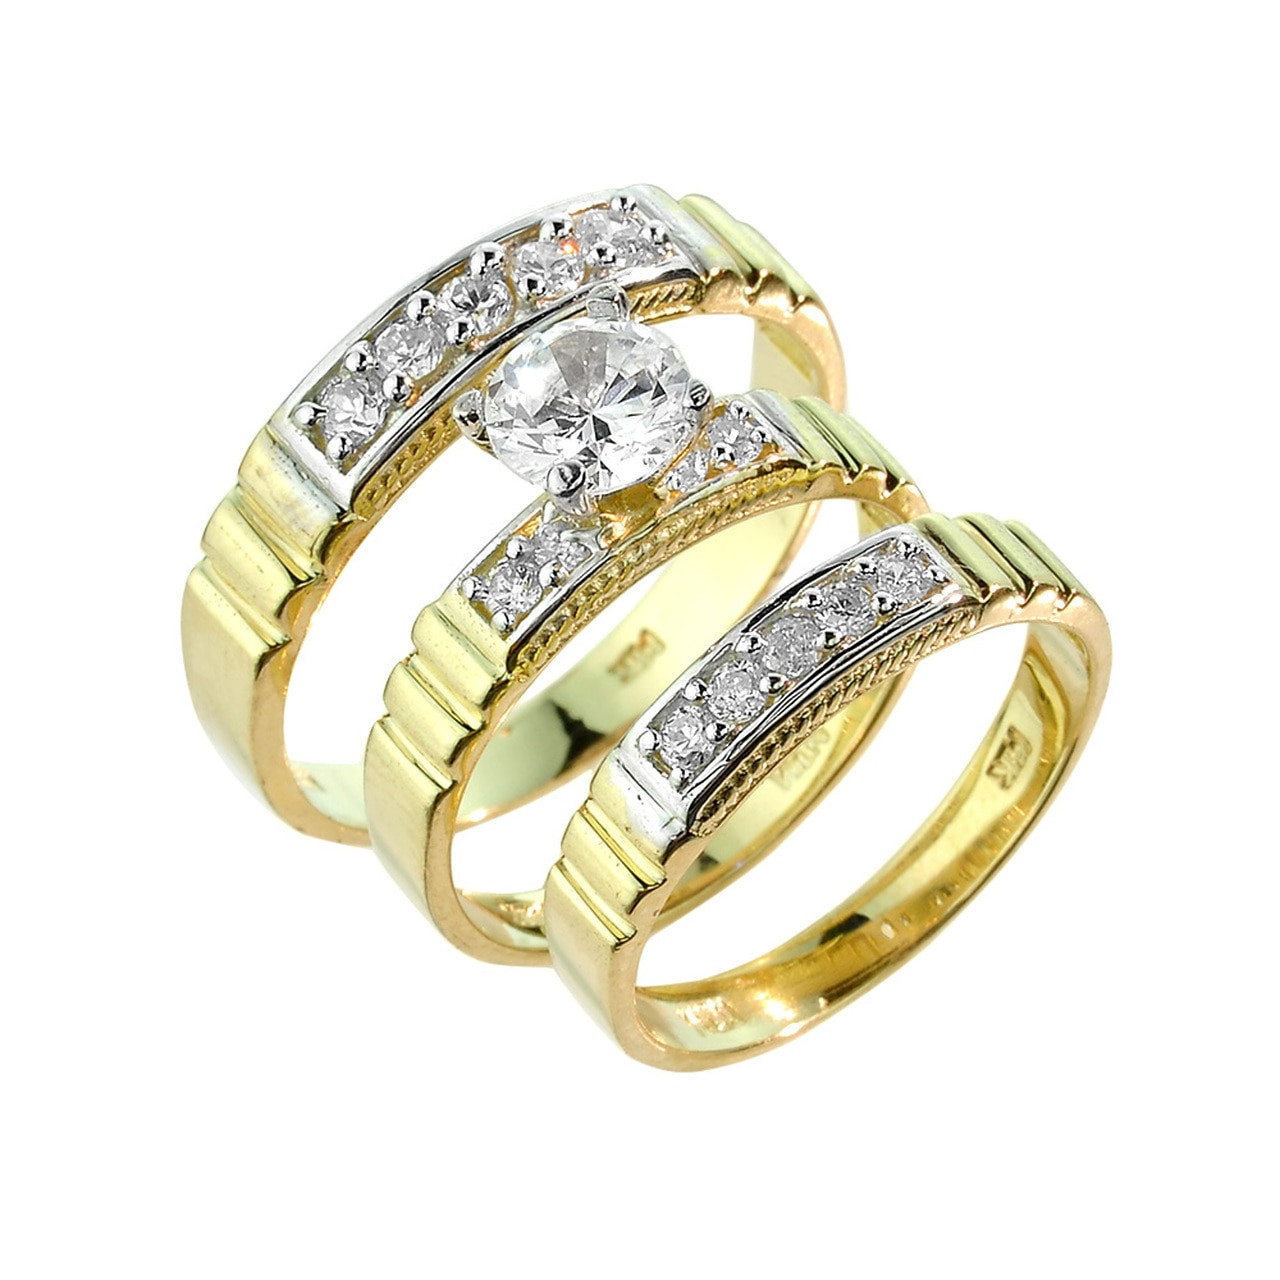 Cz Wedding Ring Sets
 Gold CZ Wedding Ring Set 3 Piece